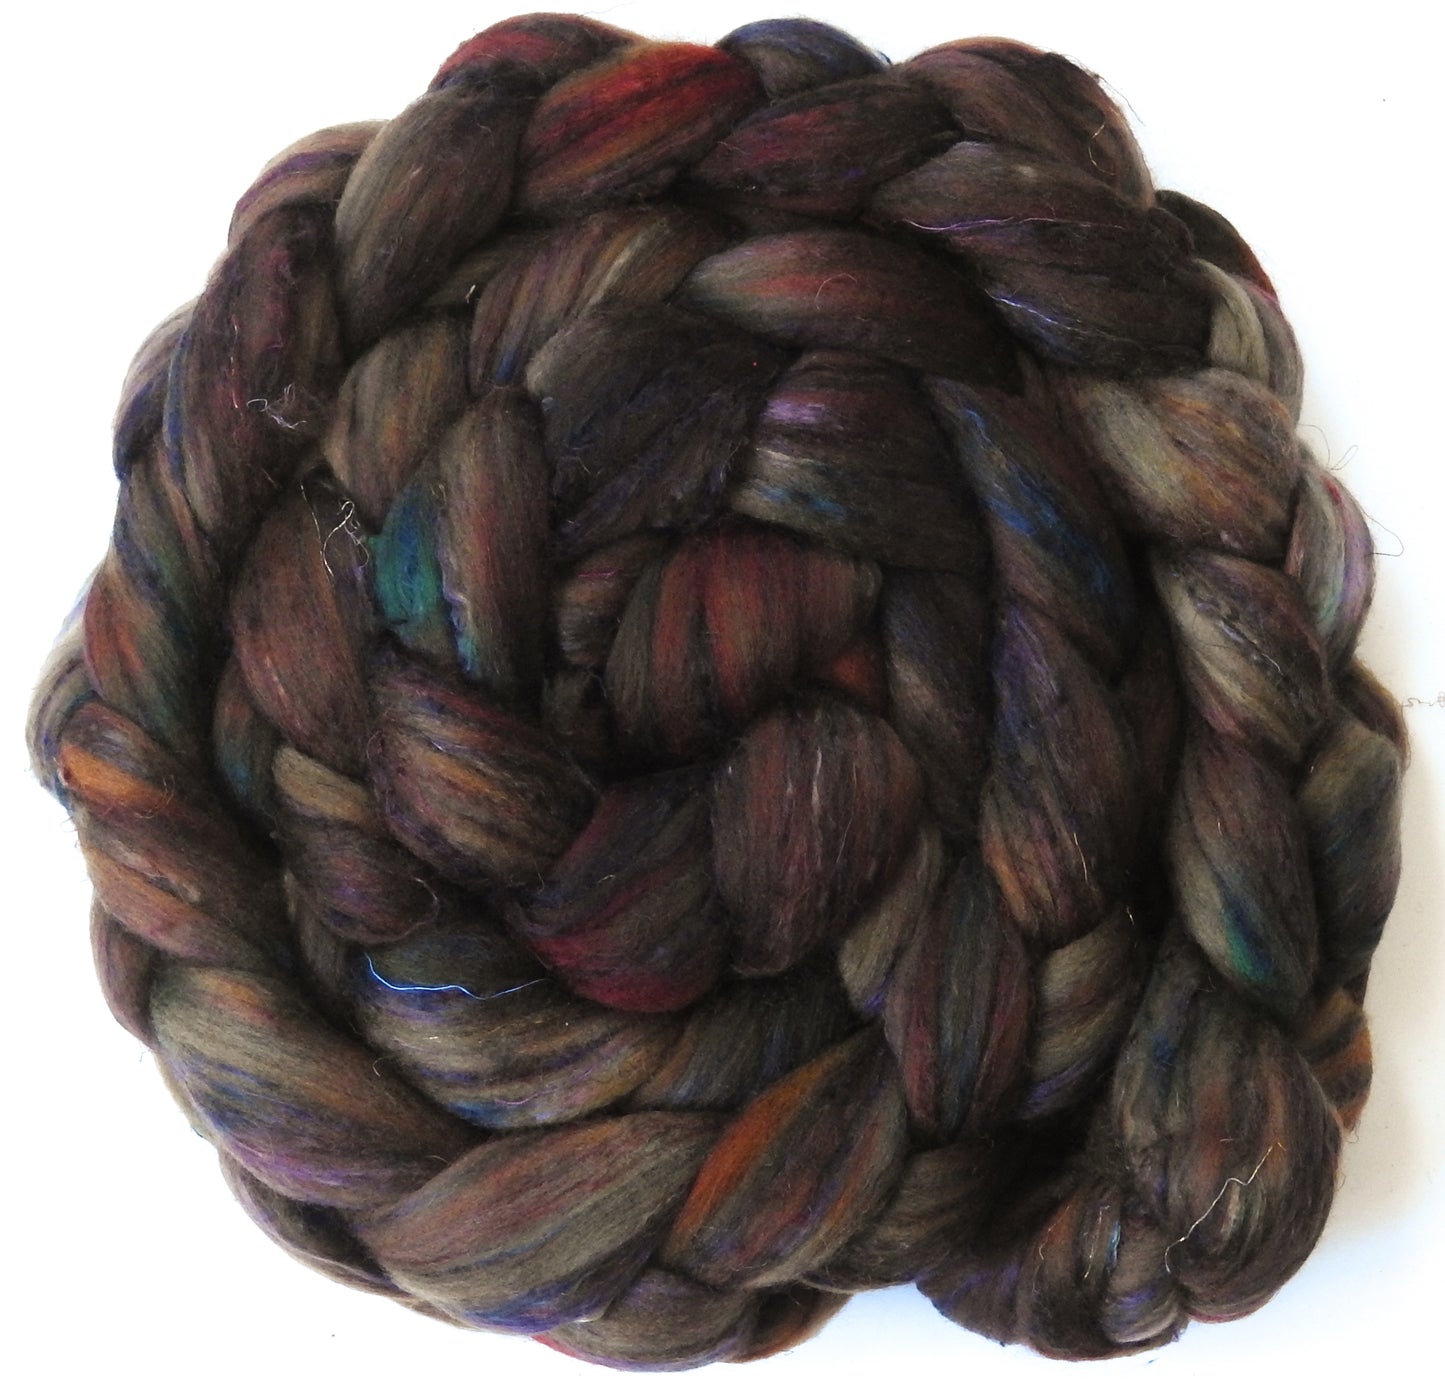 Pinecone (5.6 oz) - Batt in a Braid #39  - Falkland Merino/ Mulberry Silk / Sari Silk (50/25/25)